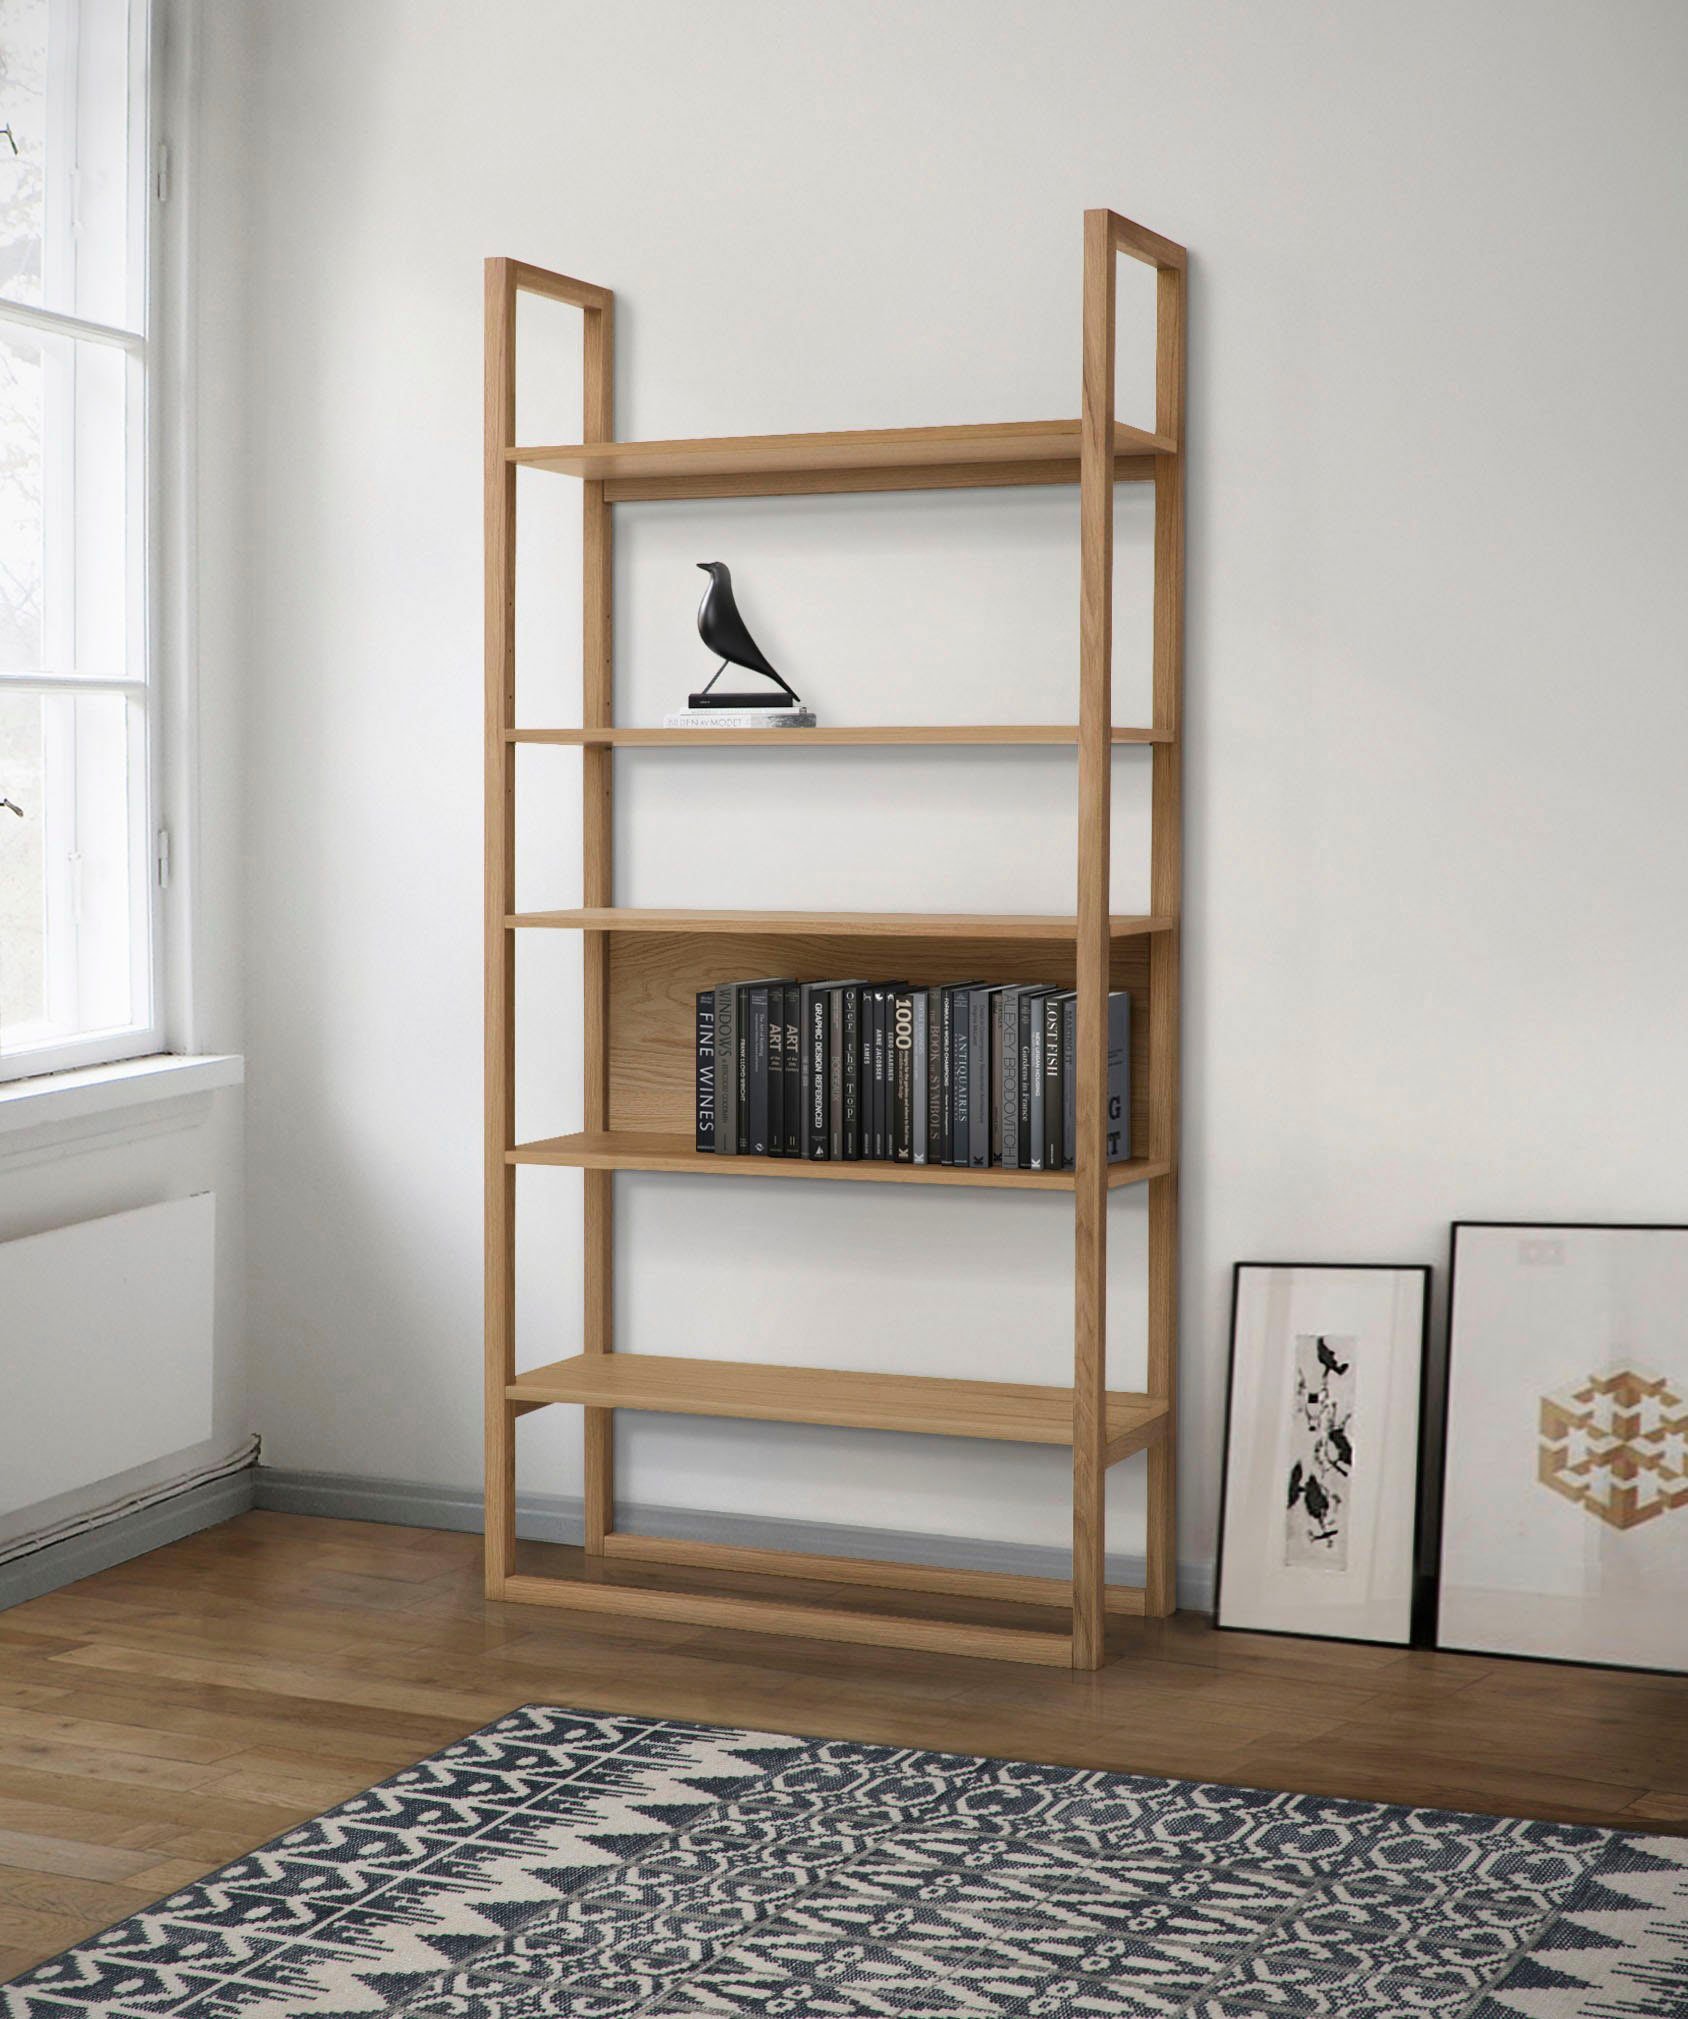 Echtes Produkt, limitierter Exklusivverkauf! Woodman Bücherregal »New Est«, de im sur skandinavischen Design, livraison massiver Eiche aus Gestell frais sans